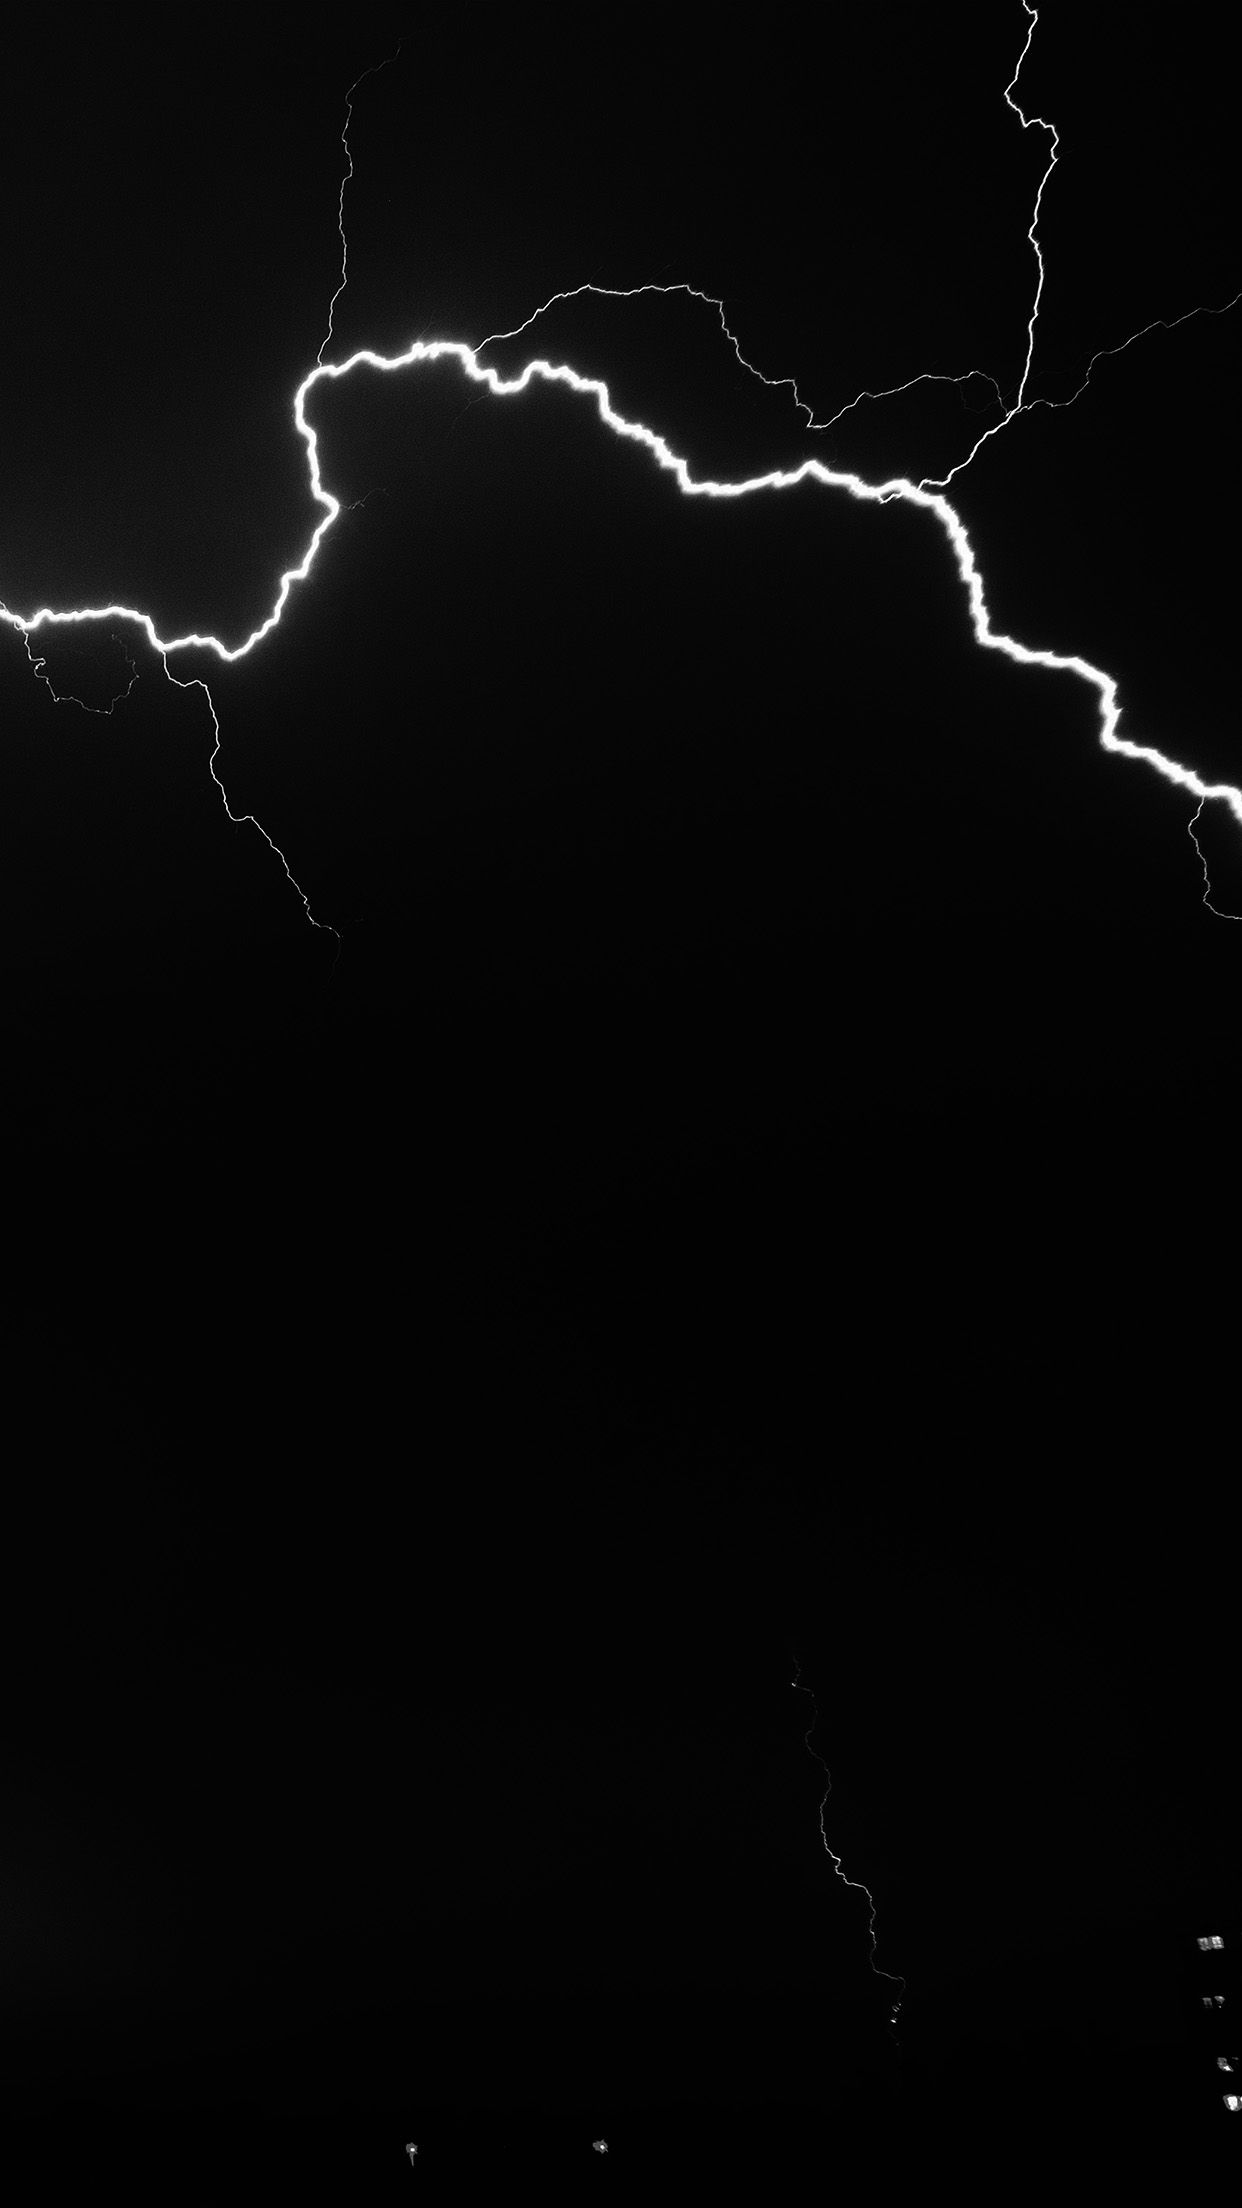 A black and white image of lightning - Lightning, storm